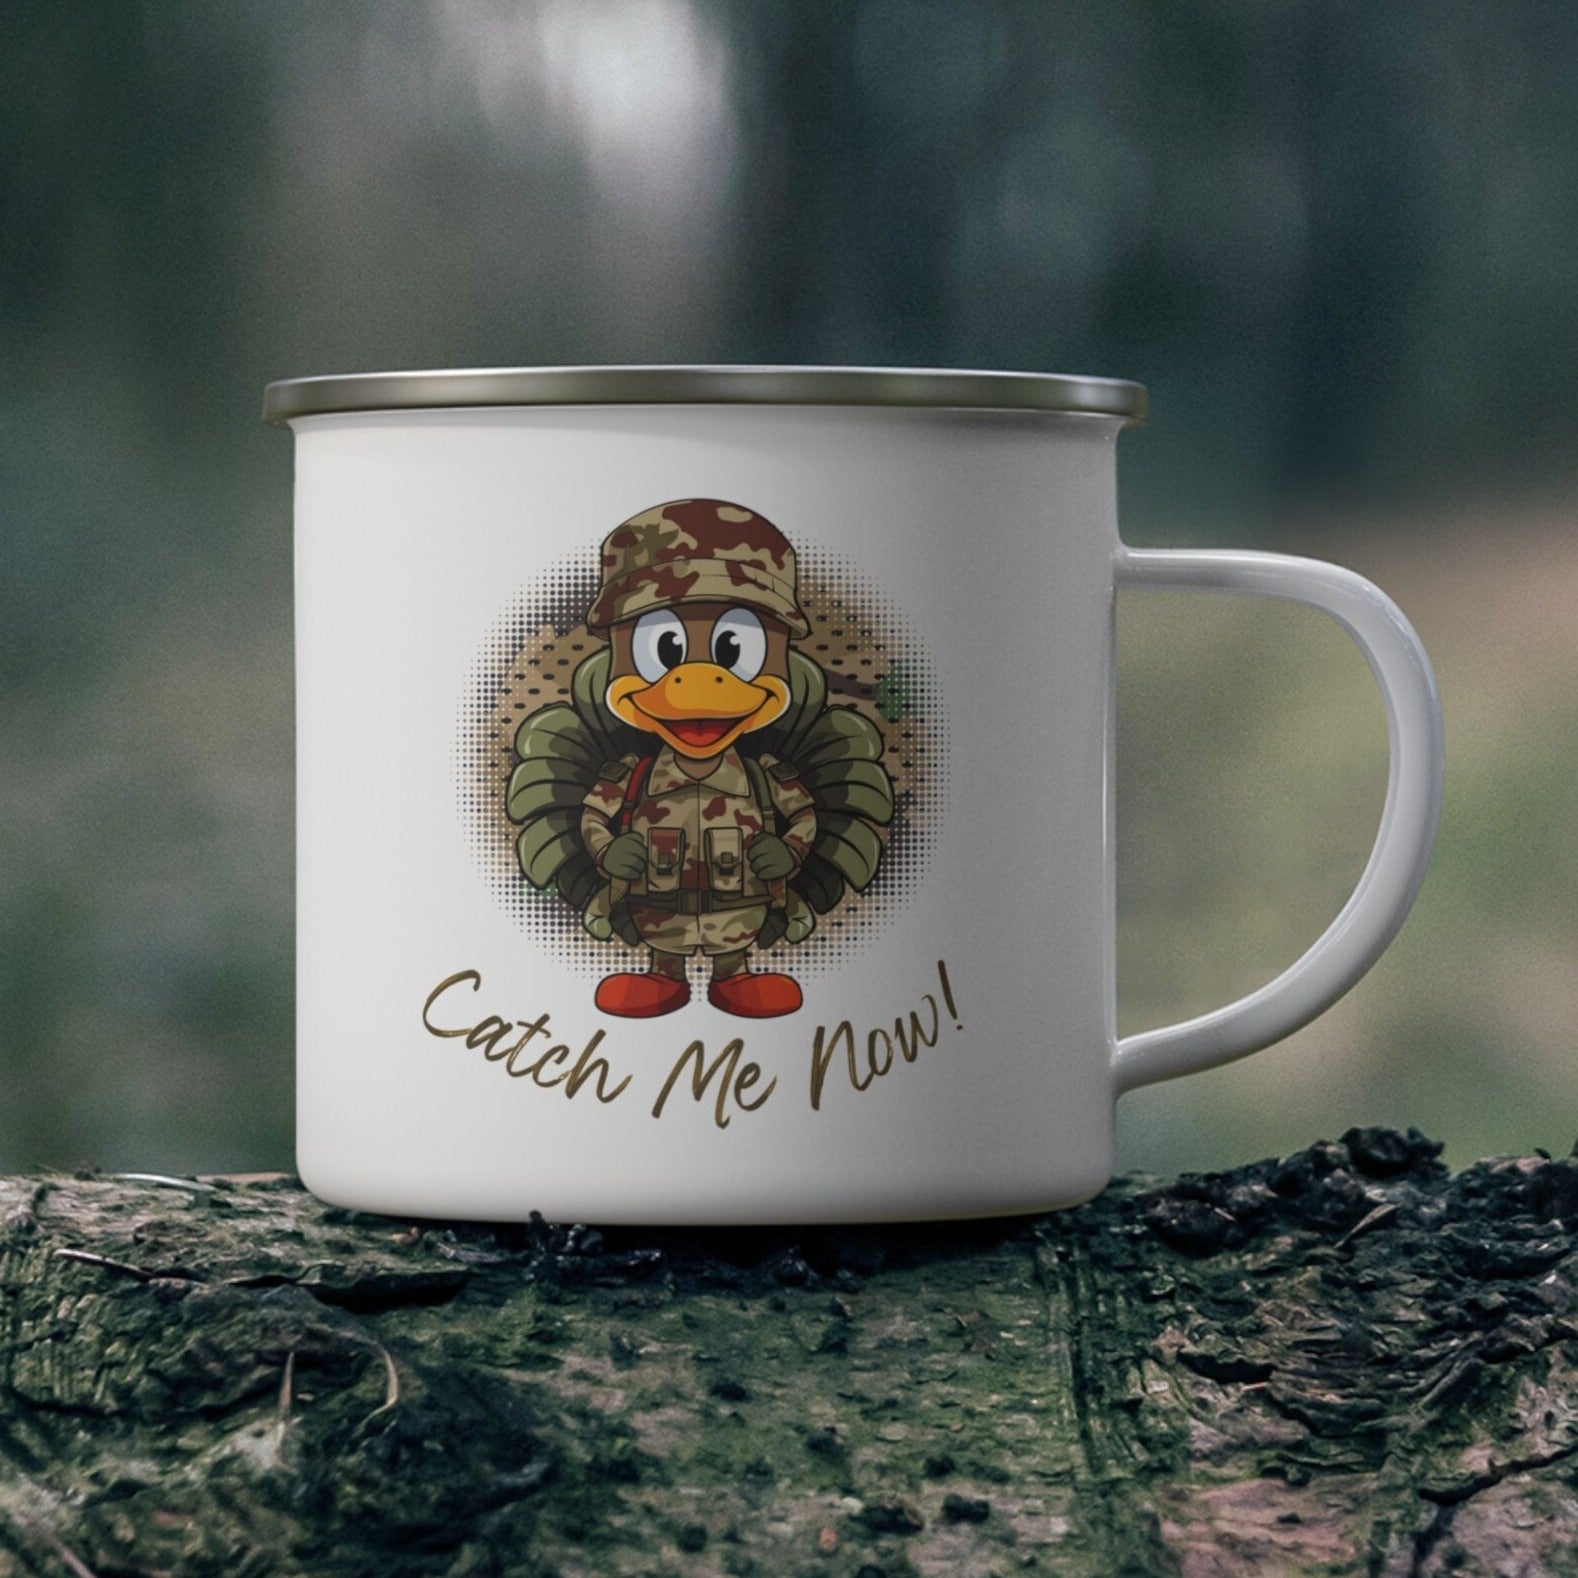 Wild Delight Enamel Mug: Camouflaged Turkey, Hunting Humor, and Outdoorsy Charm!